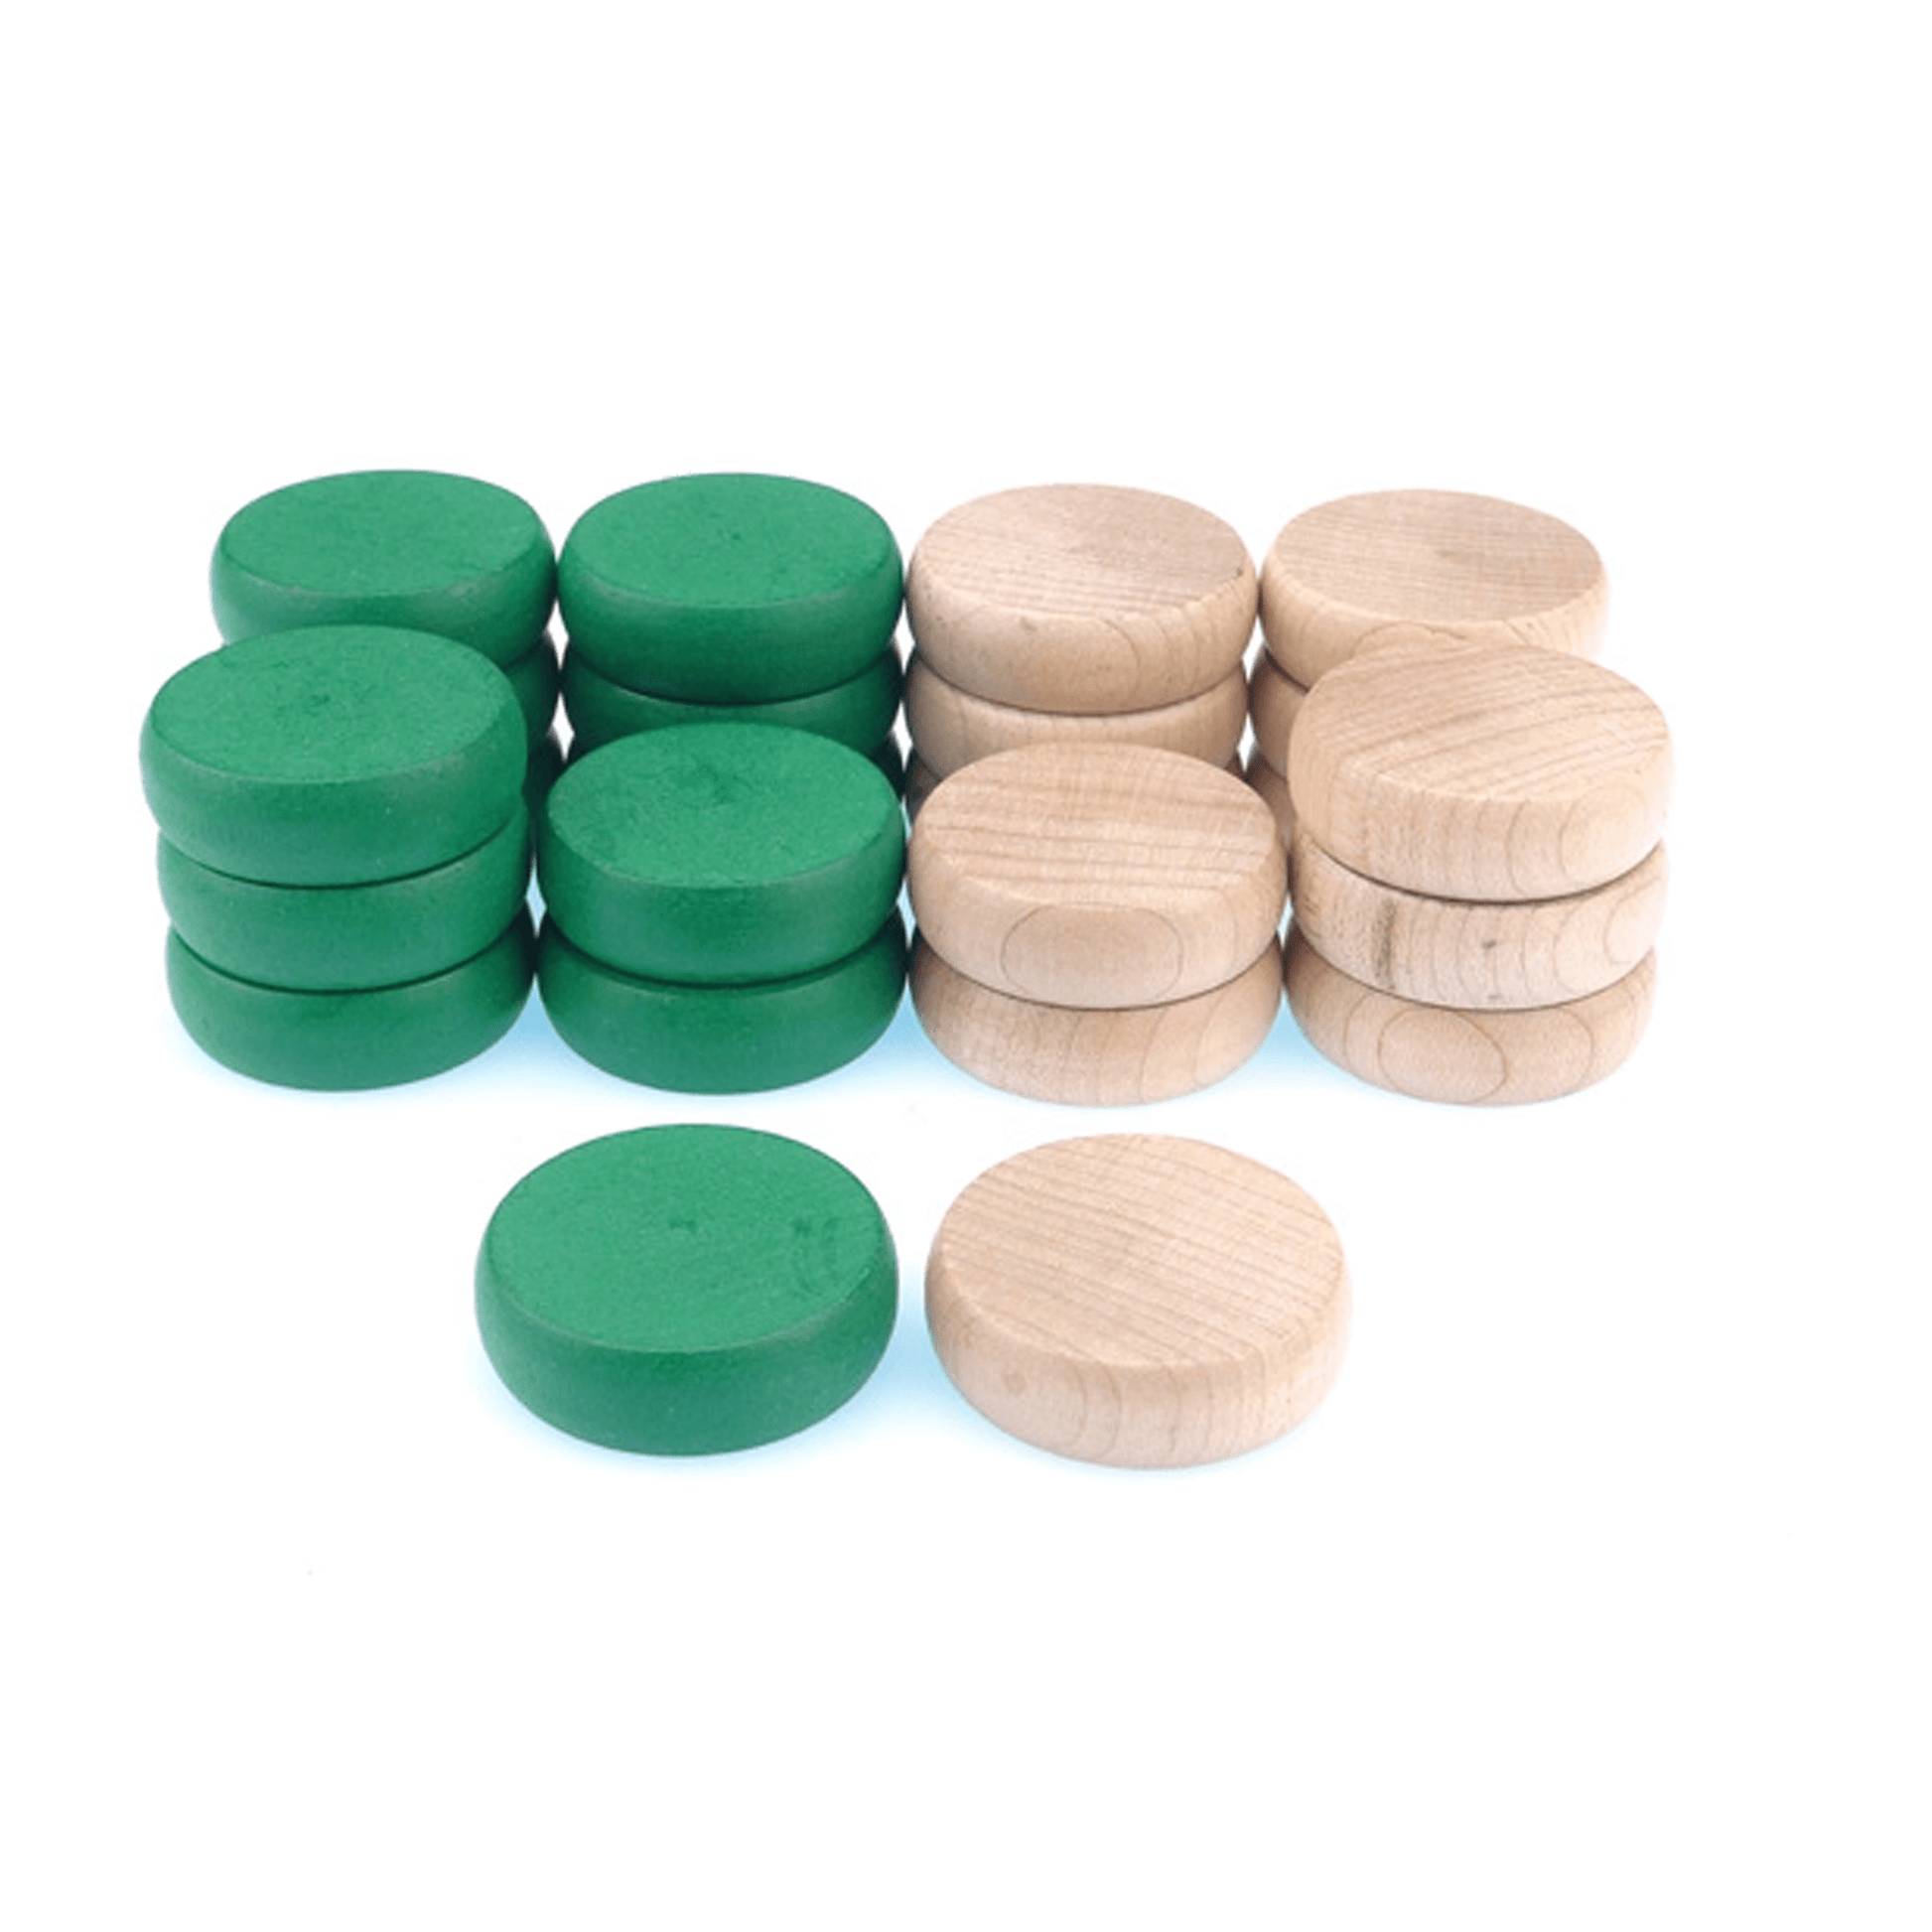 26 Green & Clear Crokinole Tournament Discs + Bag (13 Green & 13 Clear) - Crokinole Europe